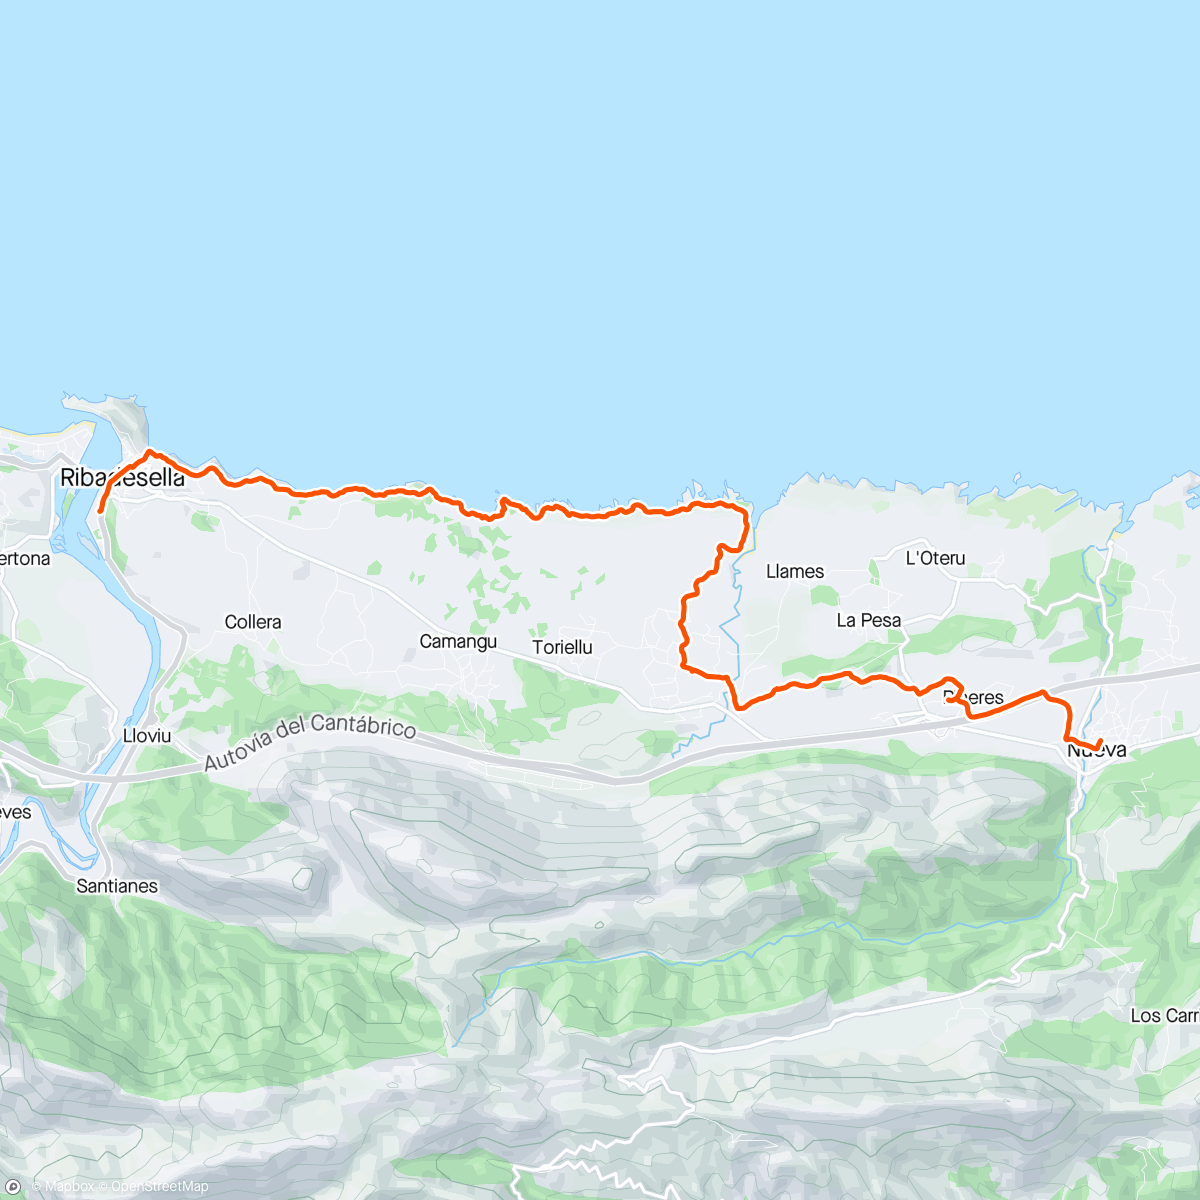 「Nueva - Ribidesella」活動的地圖